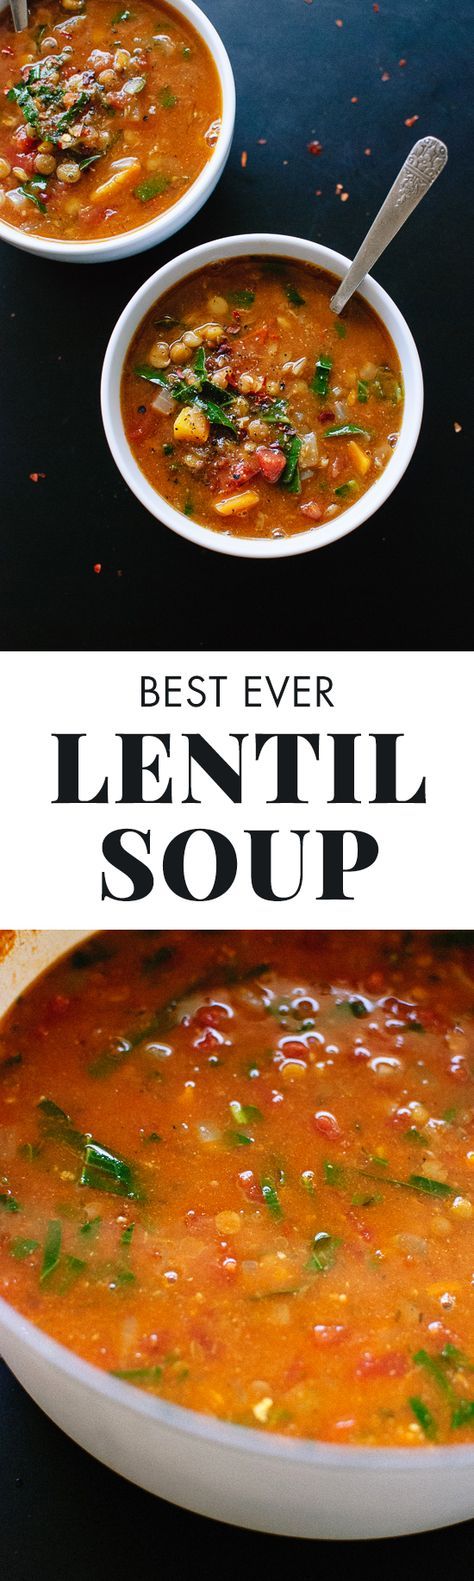 Healthy, Mediterranean-flavored lentil soup